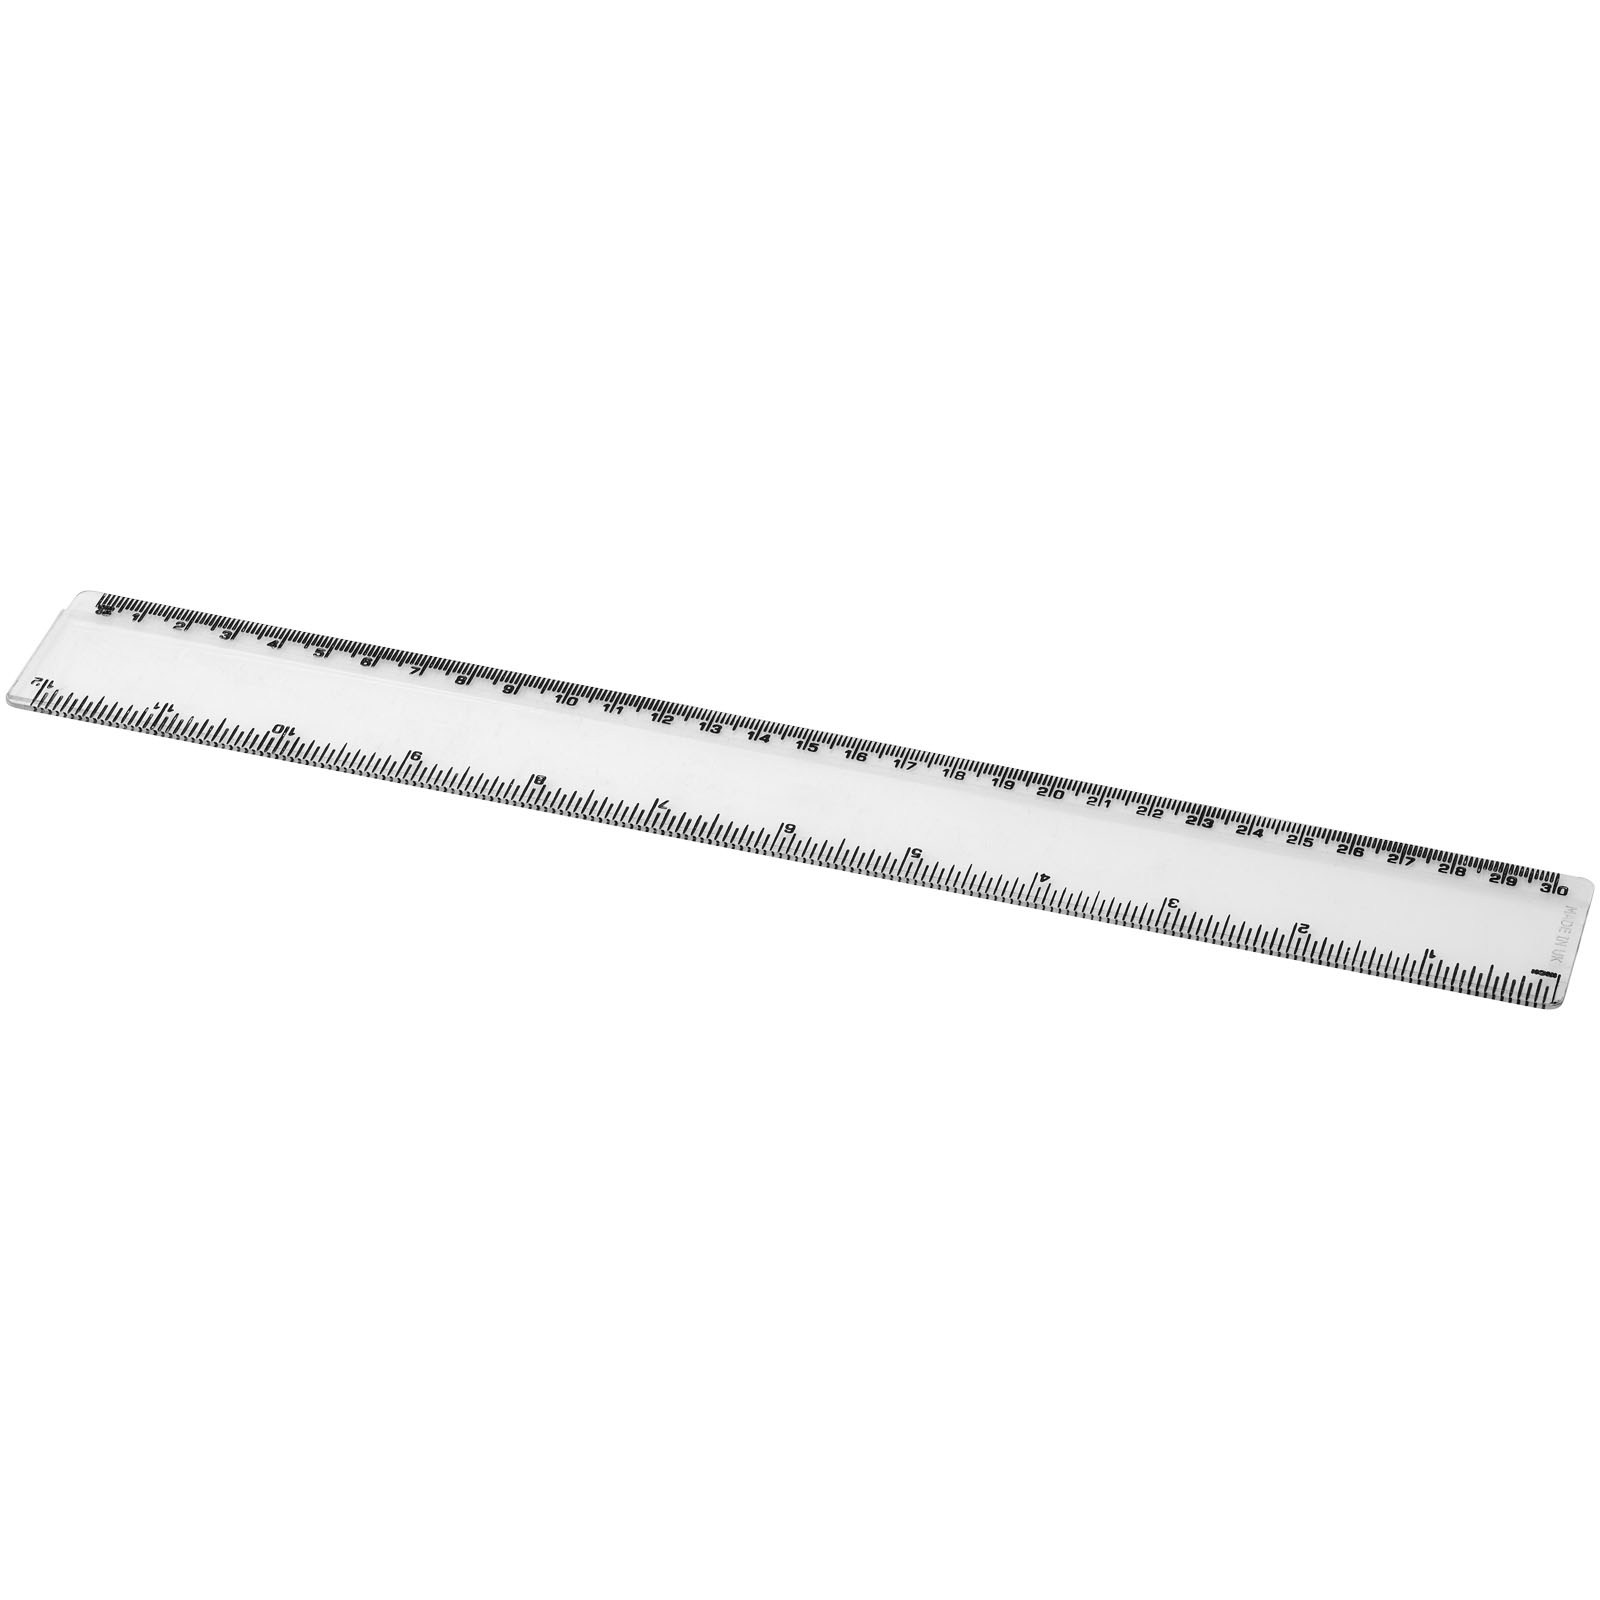 Desk Accessories - Renzo 30 cm plastic ruler